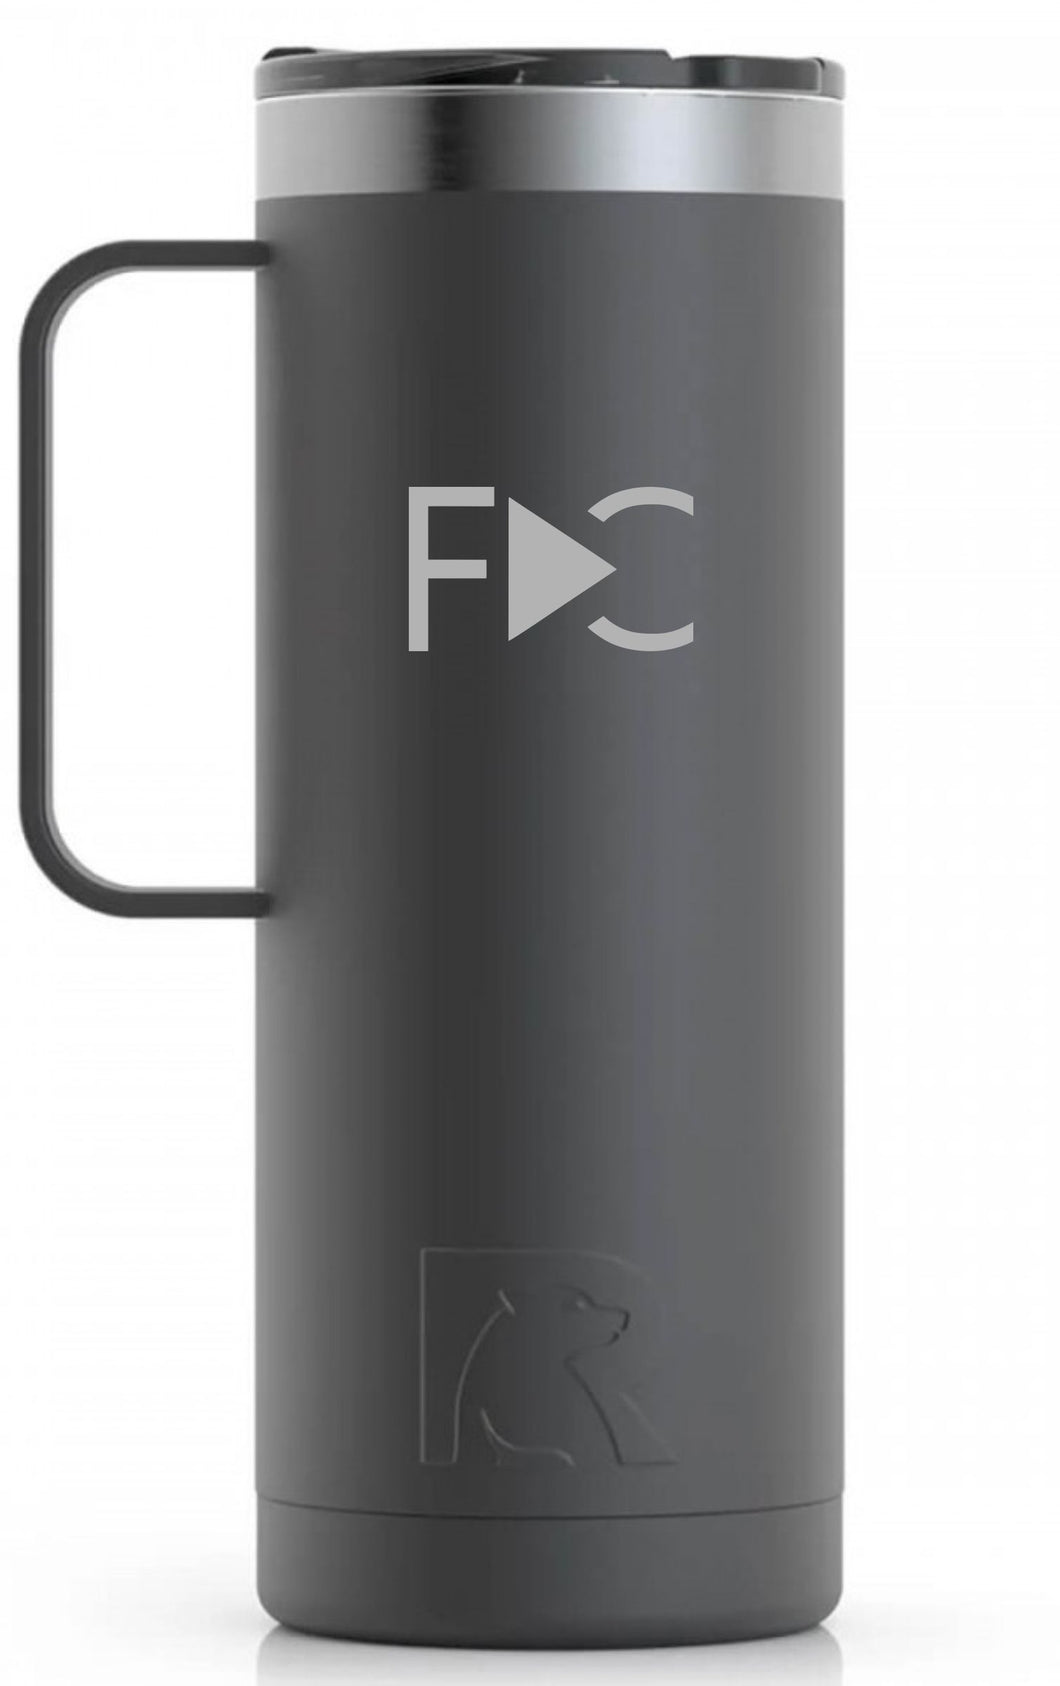 First Connect RTIC Black Coffee Mug